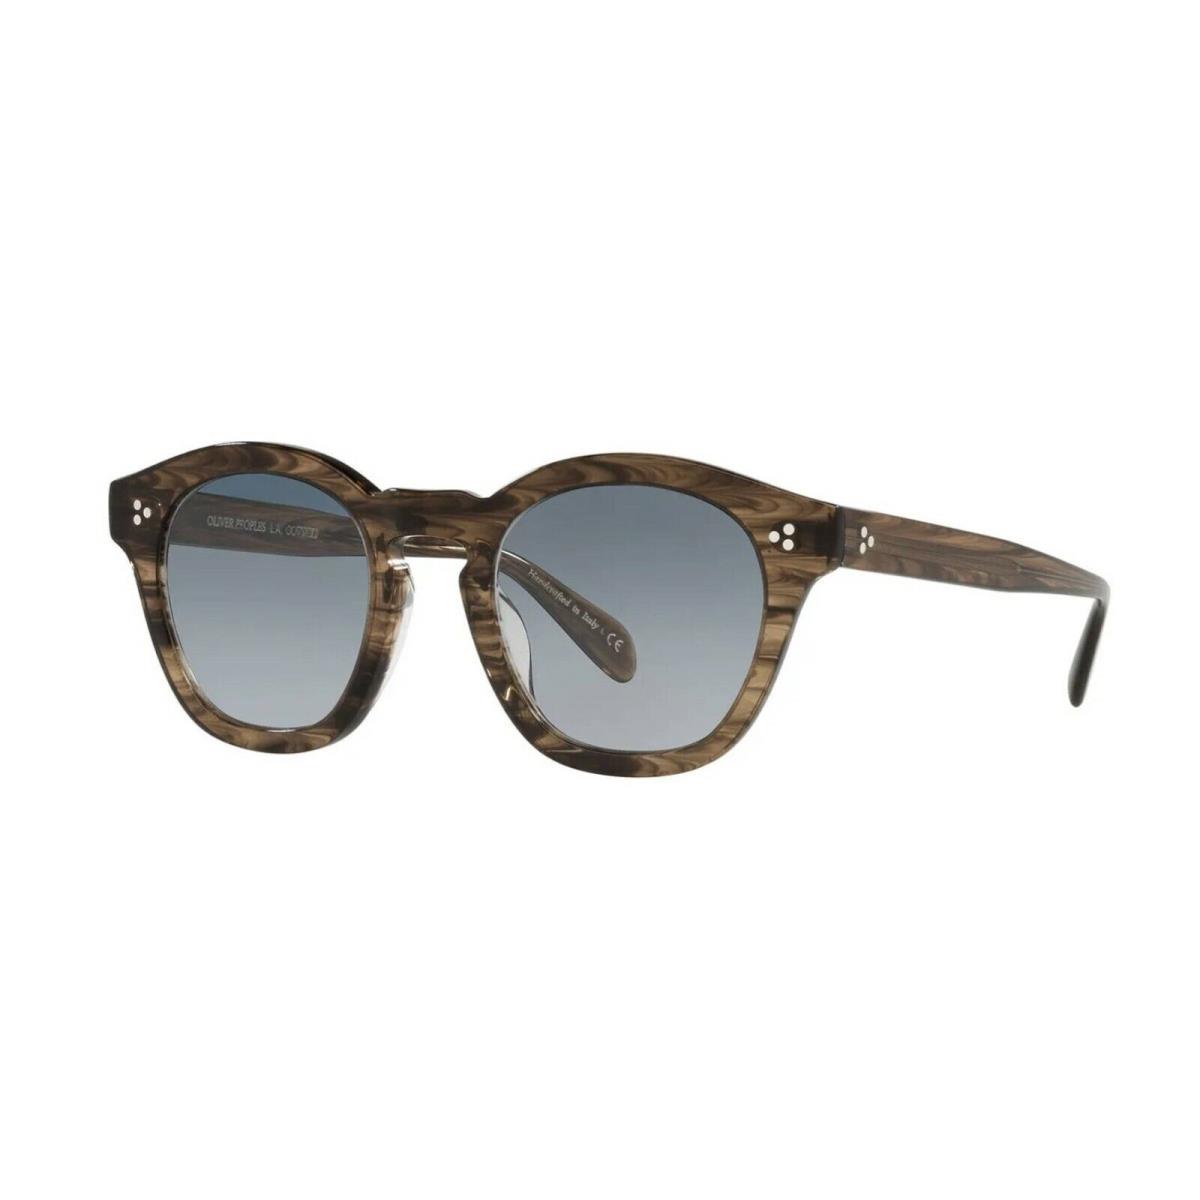 Oliver Peoples Boudreau L.a. OV 5382SU Sepia Smoke/soft Teal Shaded Sunglasses - Frame: Sepia Smoke, Lens: Soft Teal Shaded